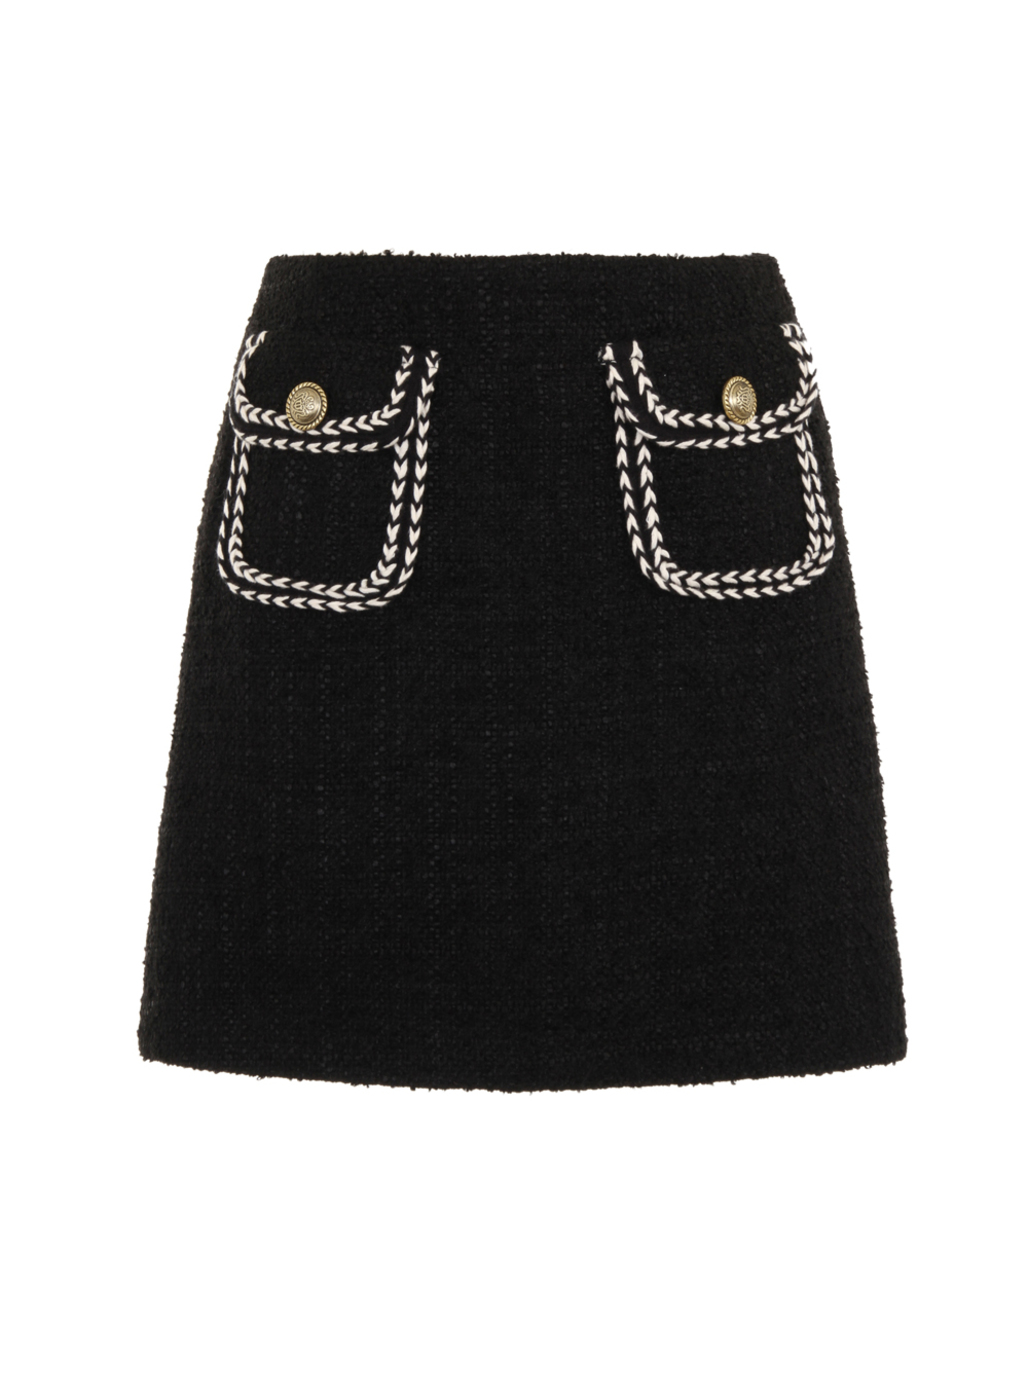 Cece DARLING Retro Mod 60s Vintage Mini Skirt 